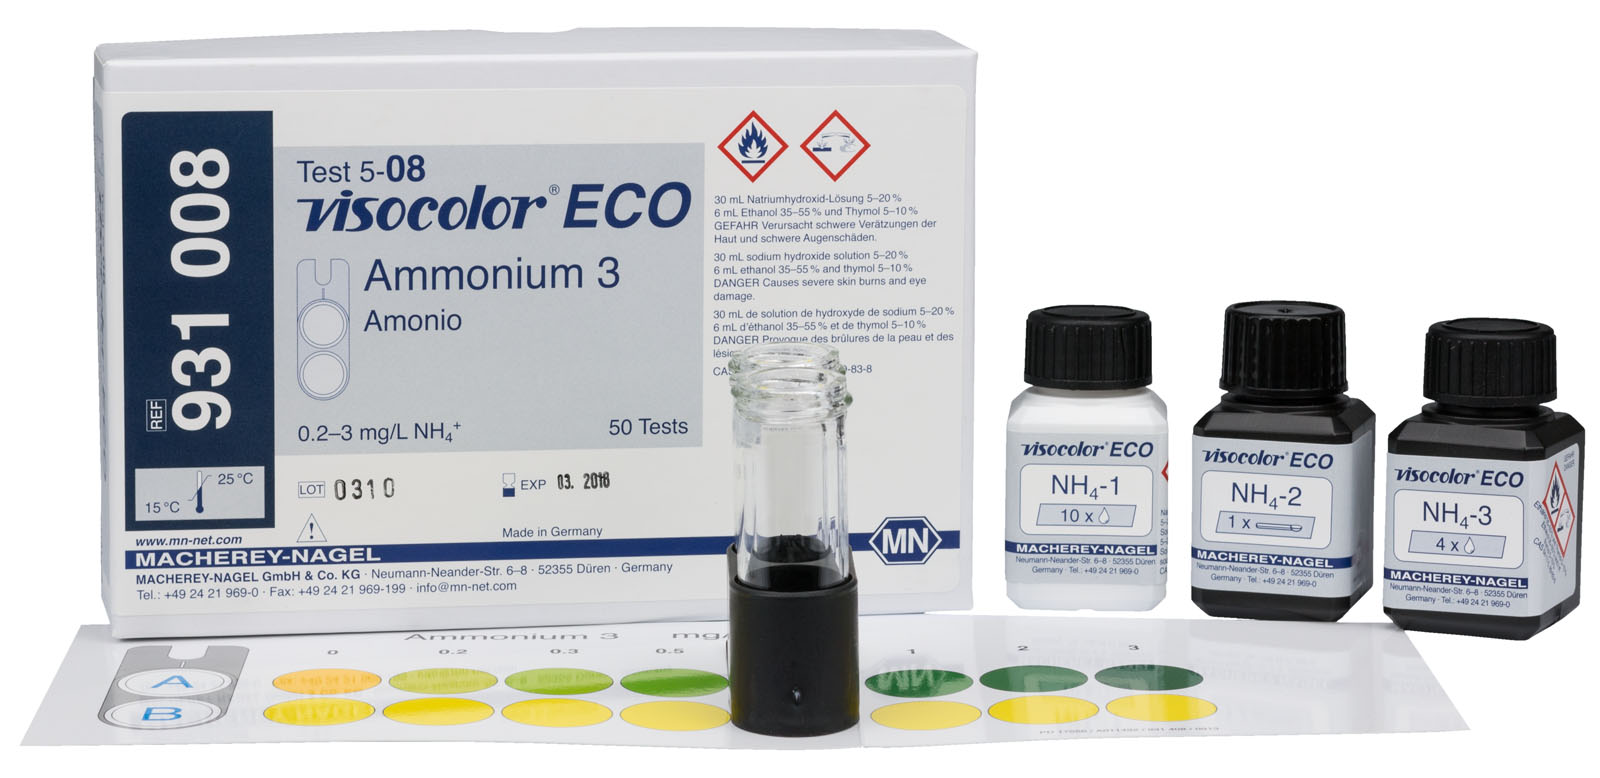 VISOCOLOR® ECO Ammonium Test Kit